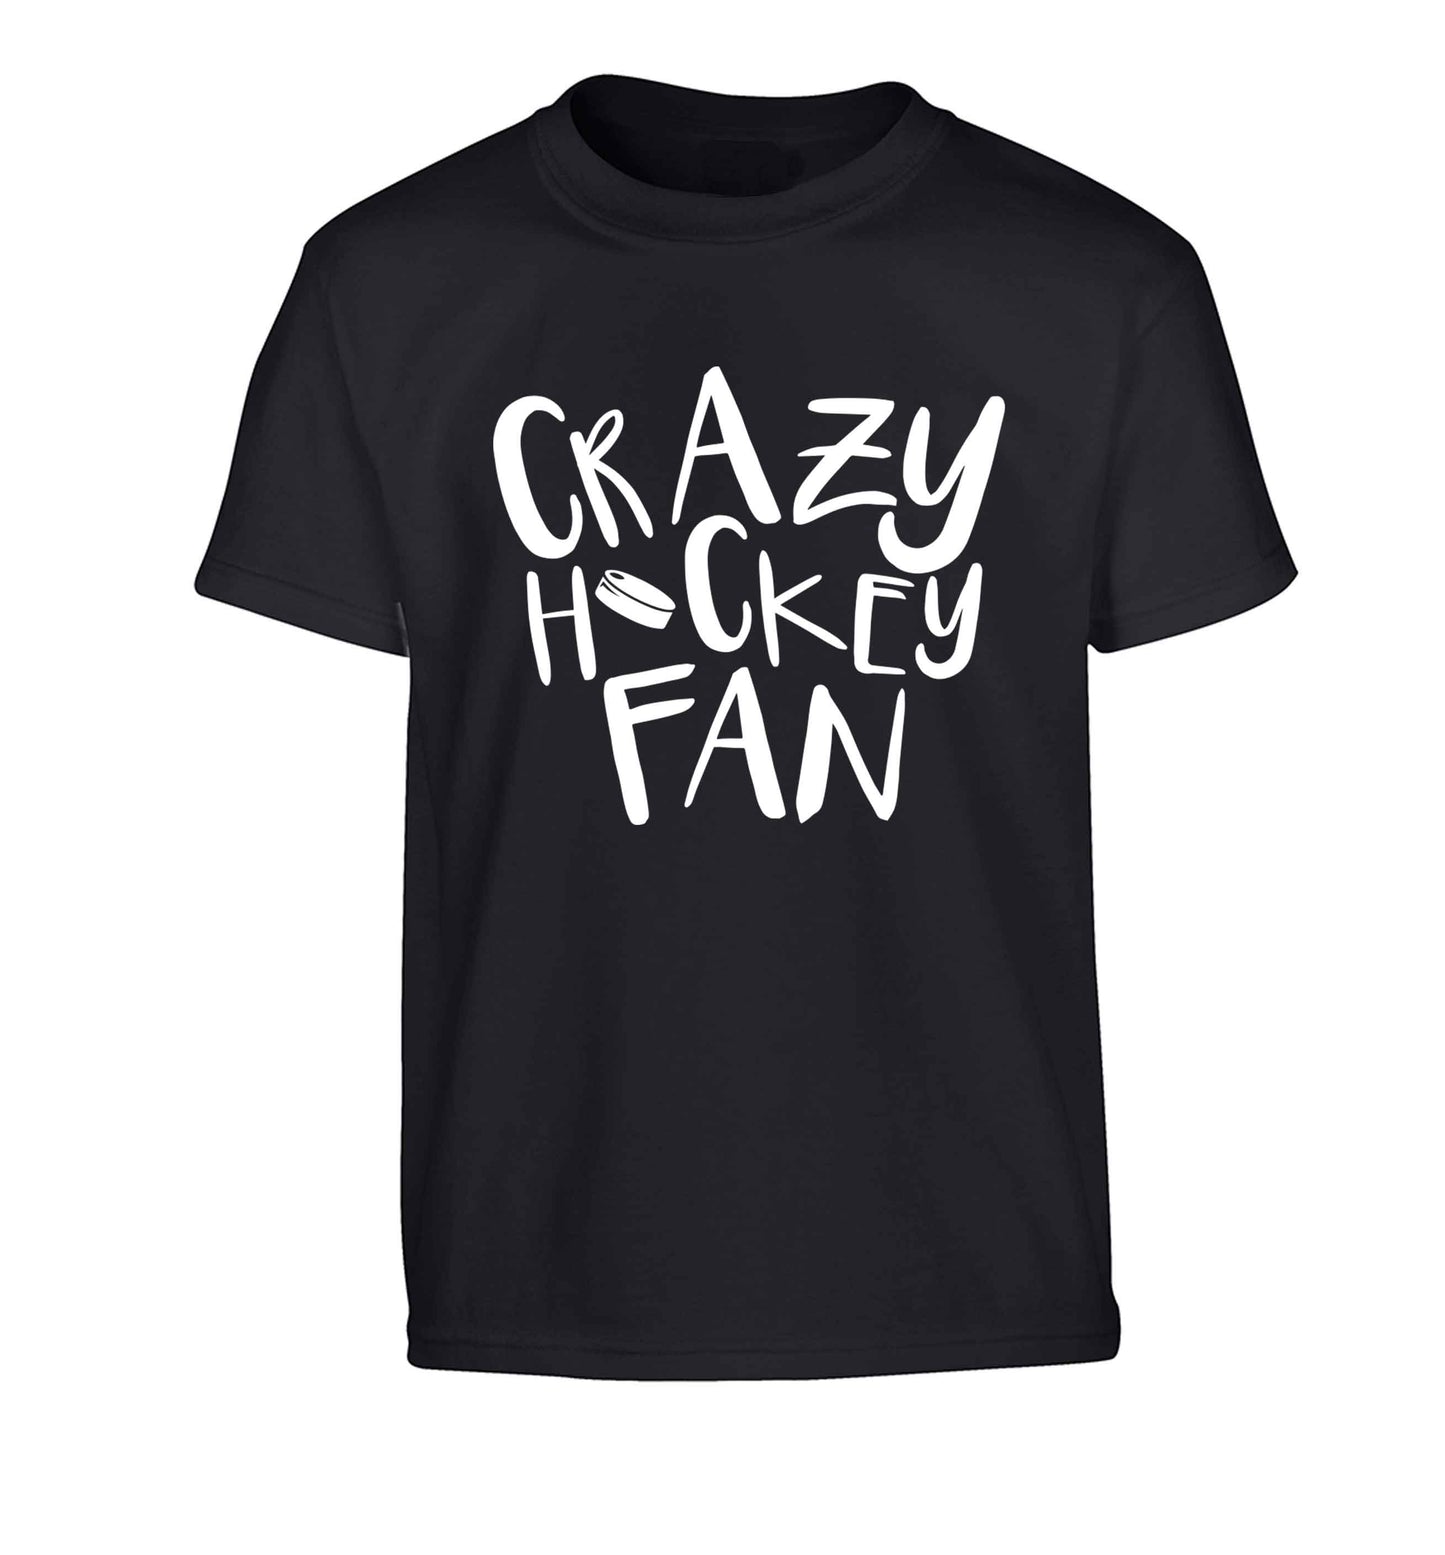 Crazy hockey fan Children's black Tshirt 12-13 Years